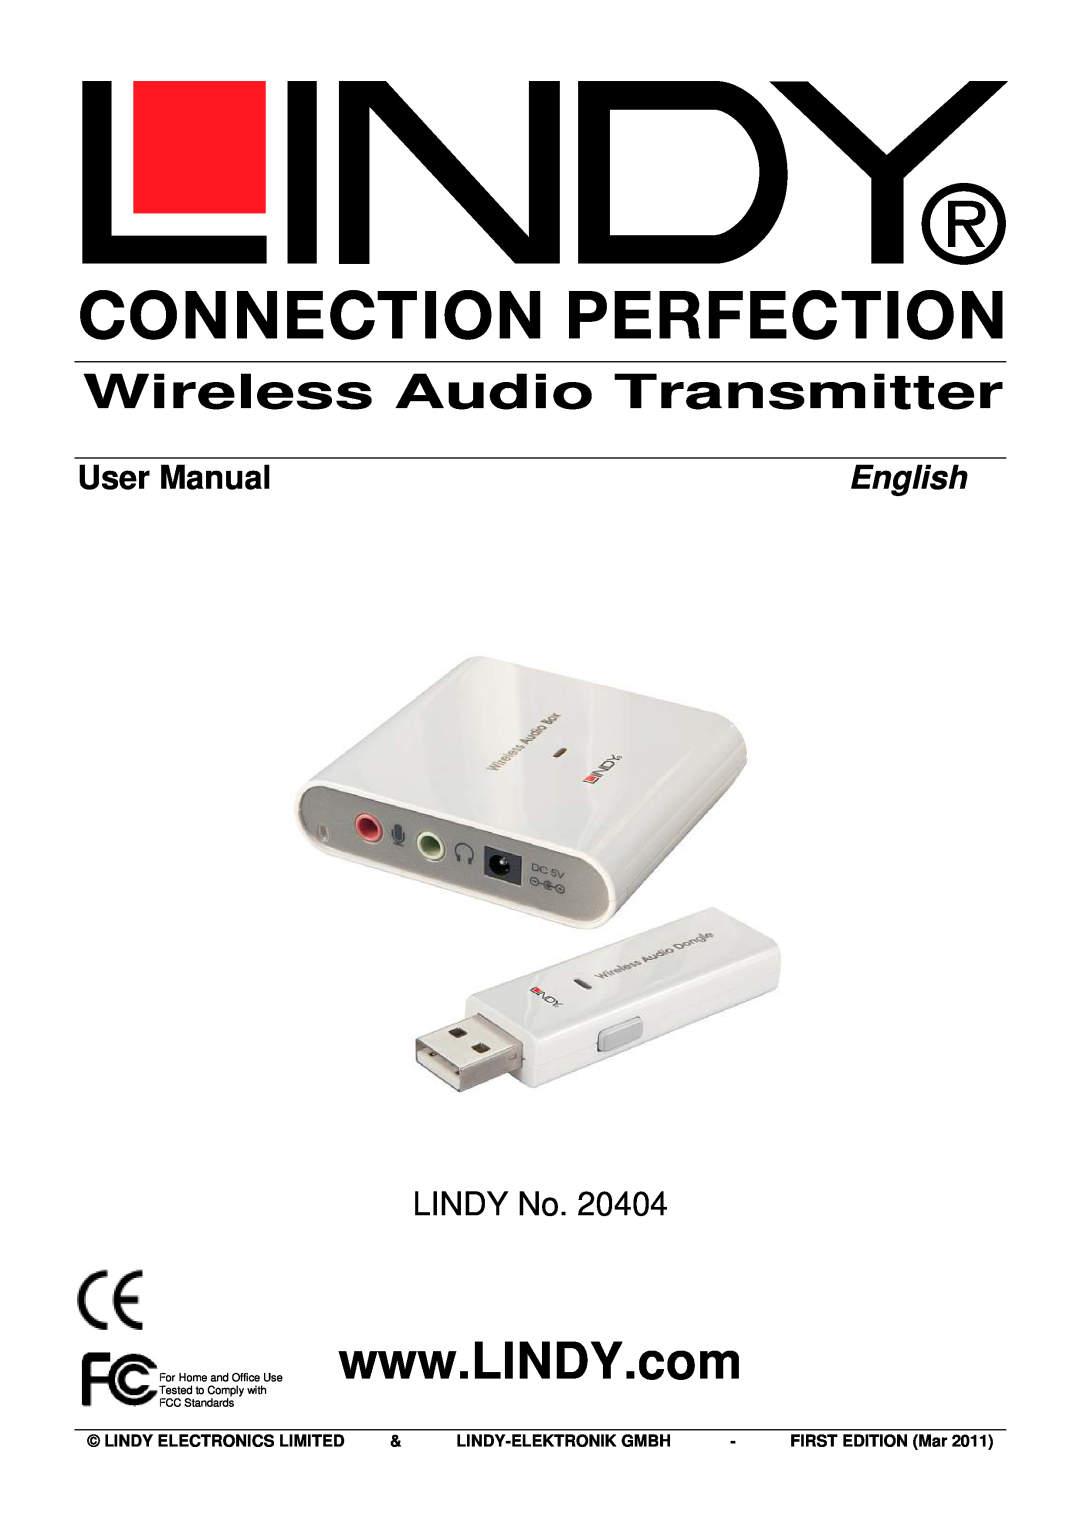 Lindy 20404 user manual English, Wireless Audio Transmitter, LINDY No, Lindy Electronics Limited, Lindy-Elektronikgmbh 